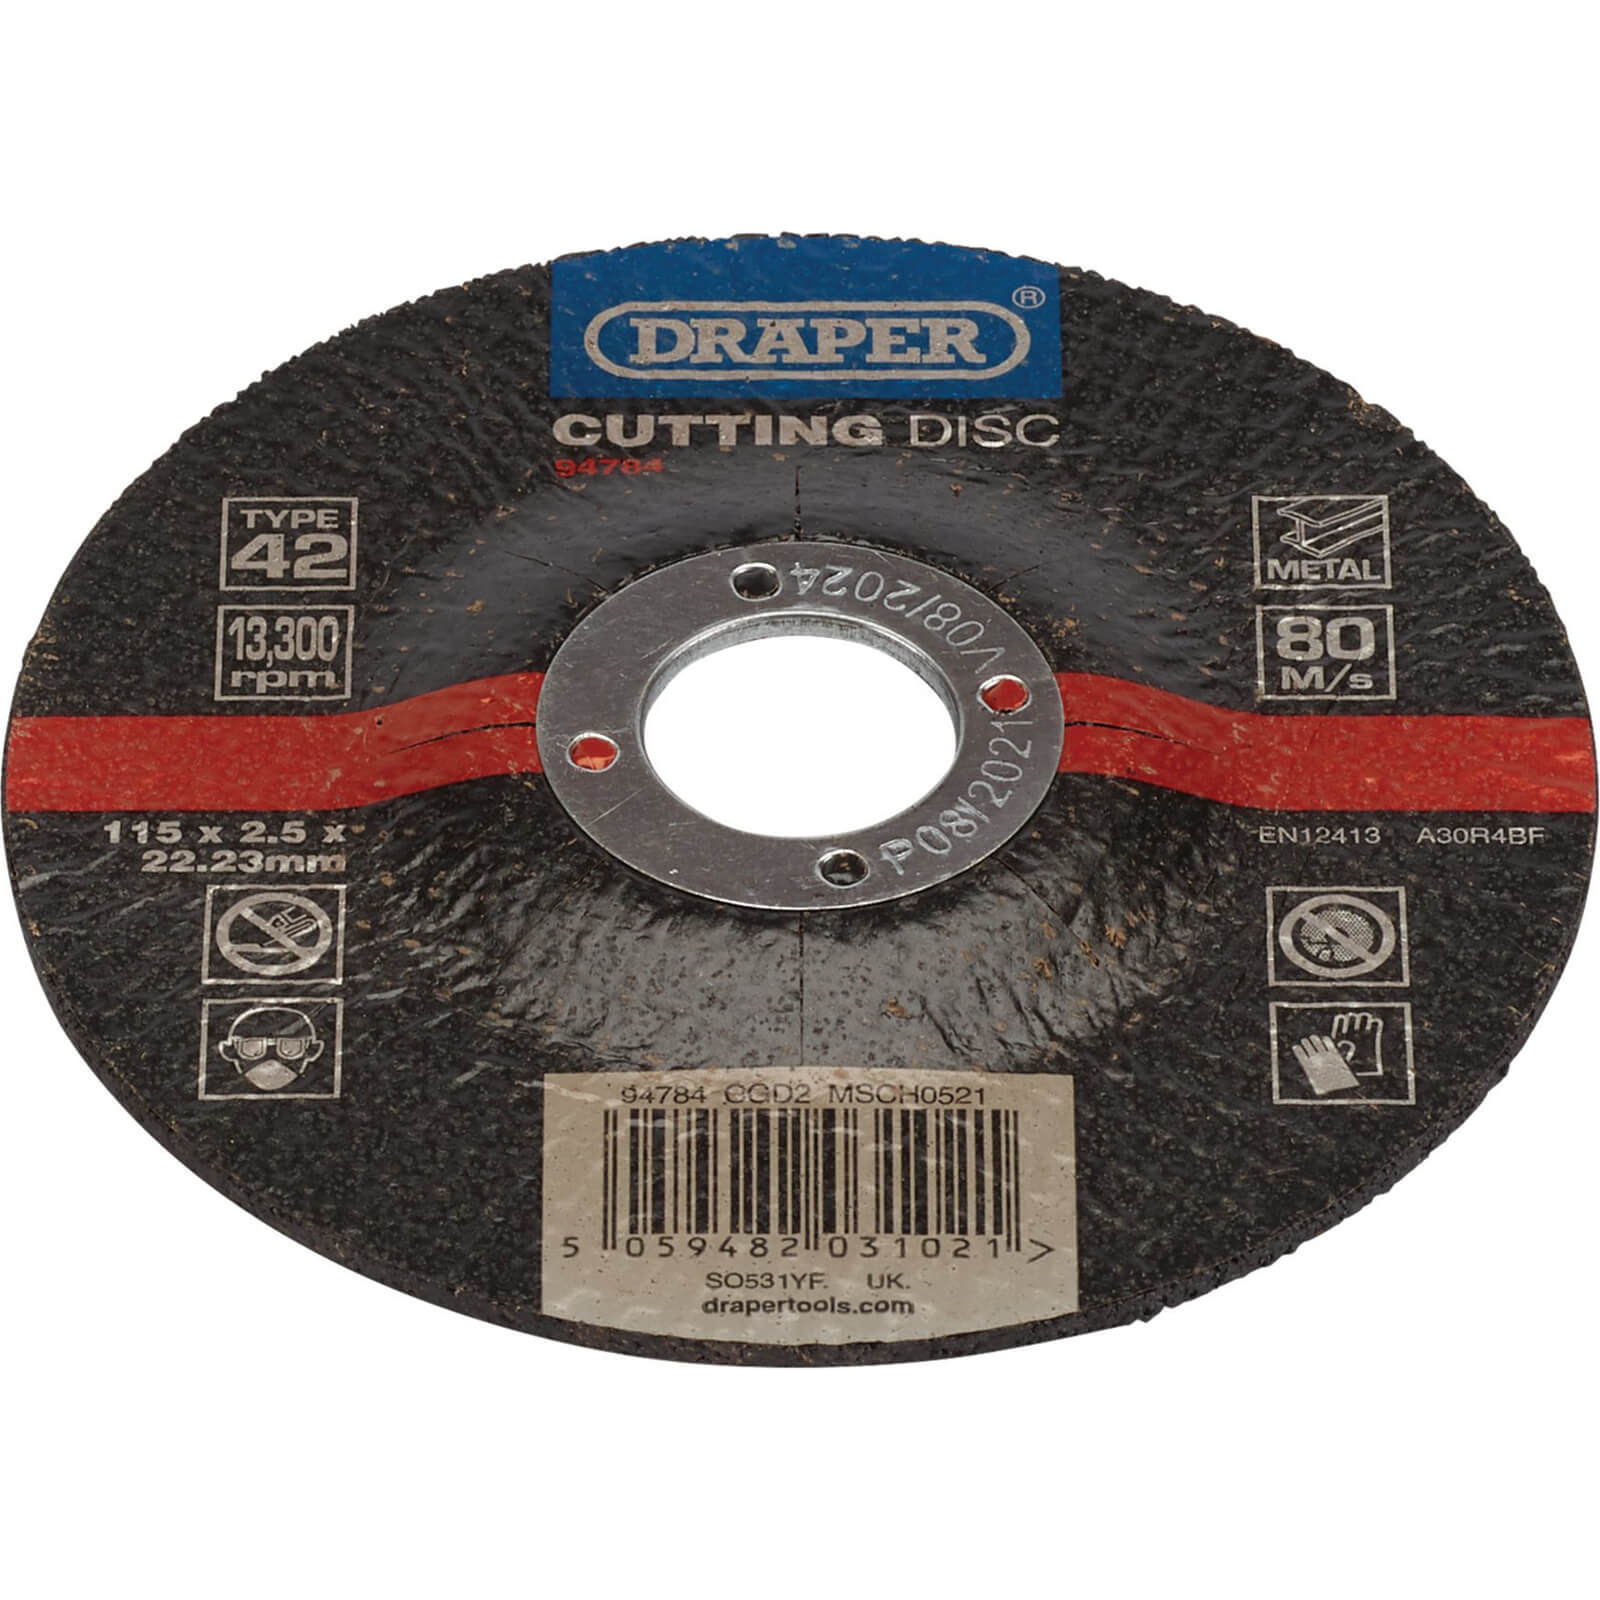 Image of Draper DPC Depressed Centre Metal Cutting Disc 115mm 2.5mm 22mm